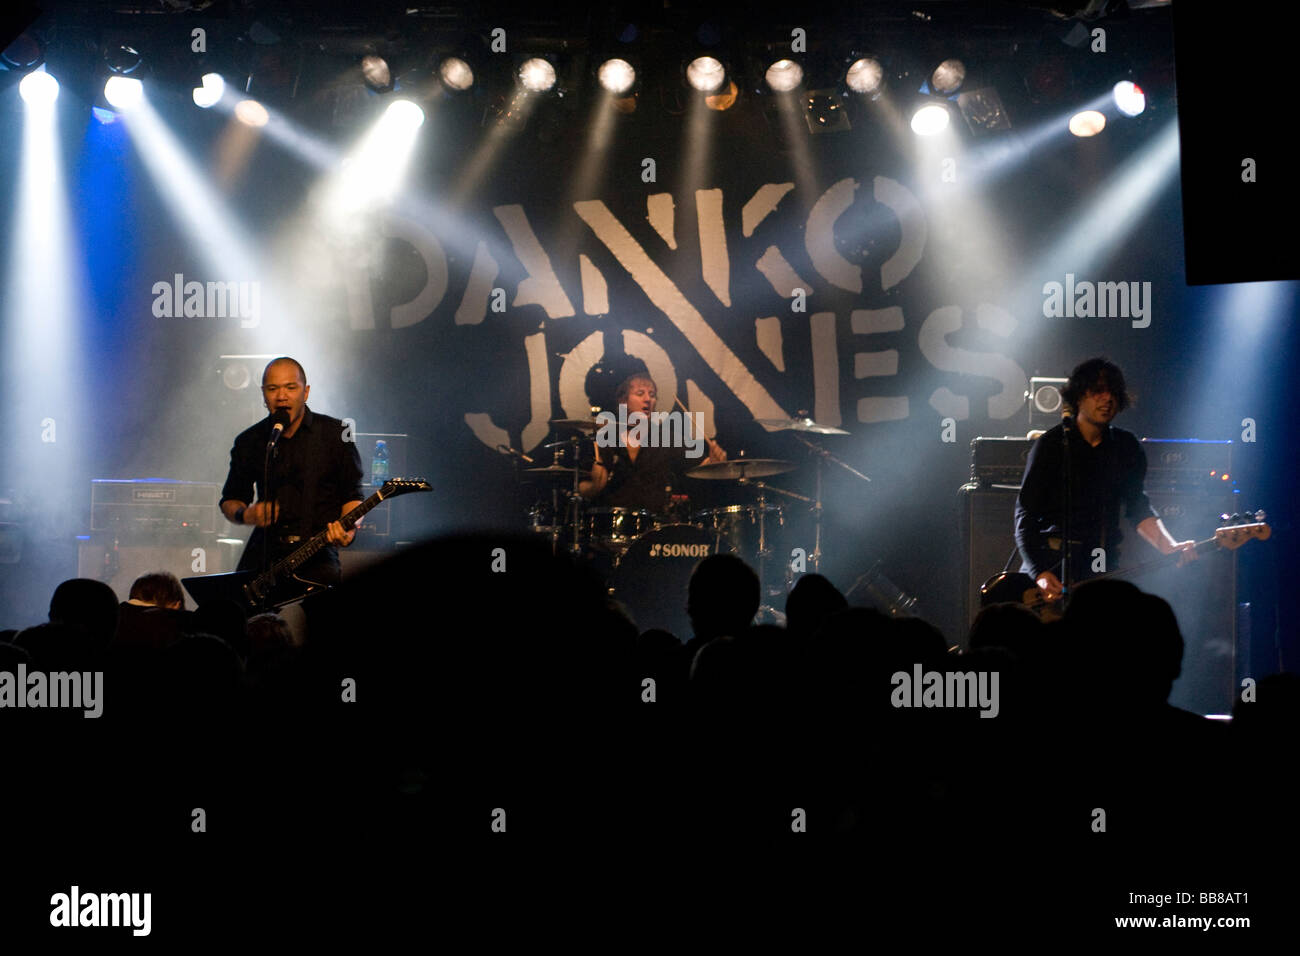 Danko Jones, of the same-named Canadian garage/blues/rock band, performing live at Schueuer concert hall, Lucerne, Switzerland, Stock Photo